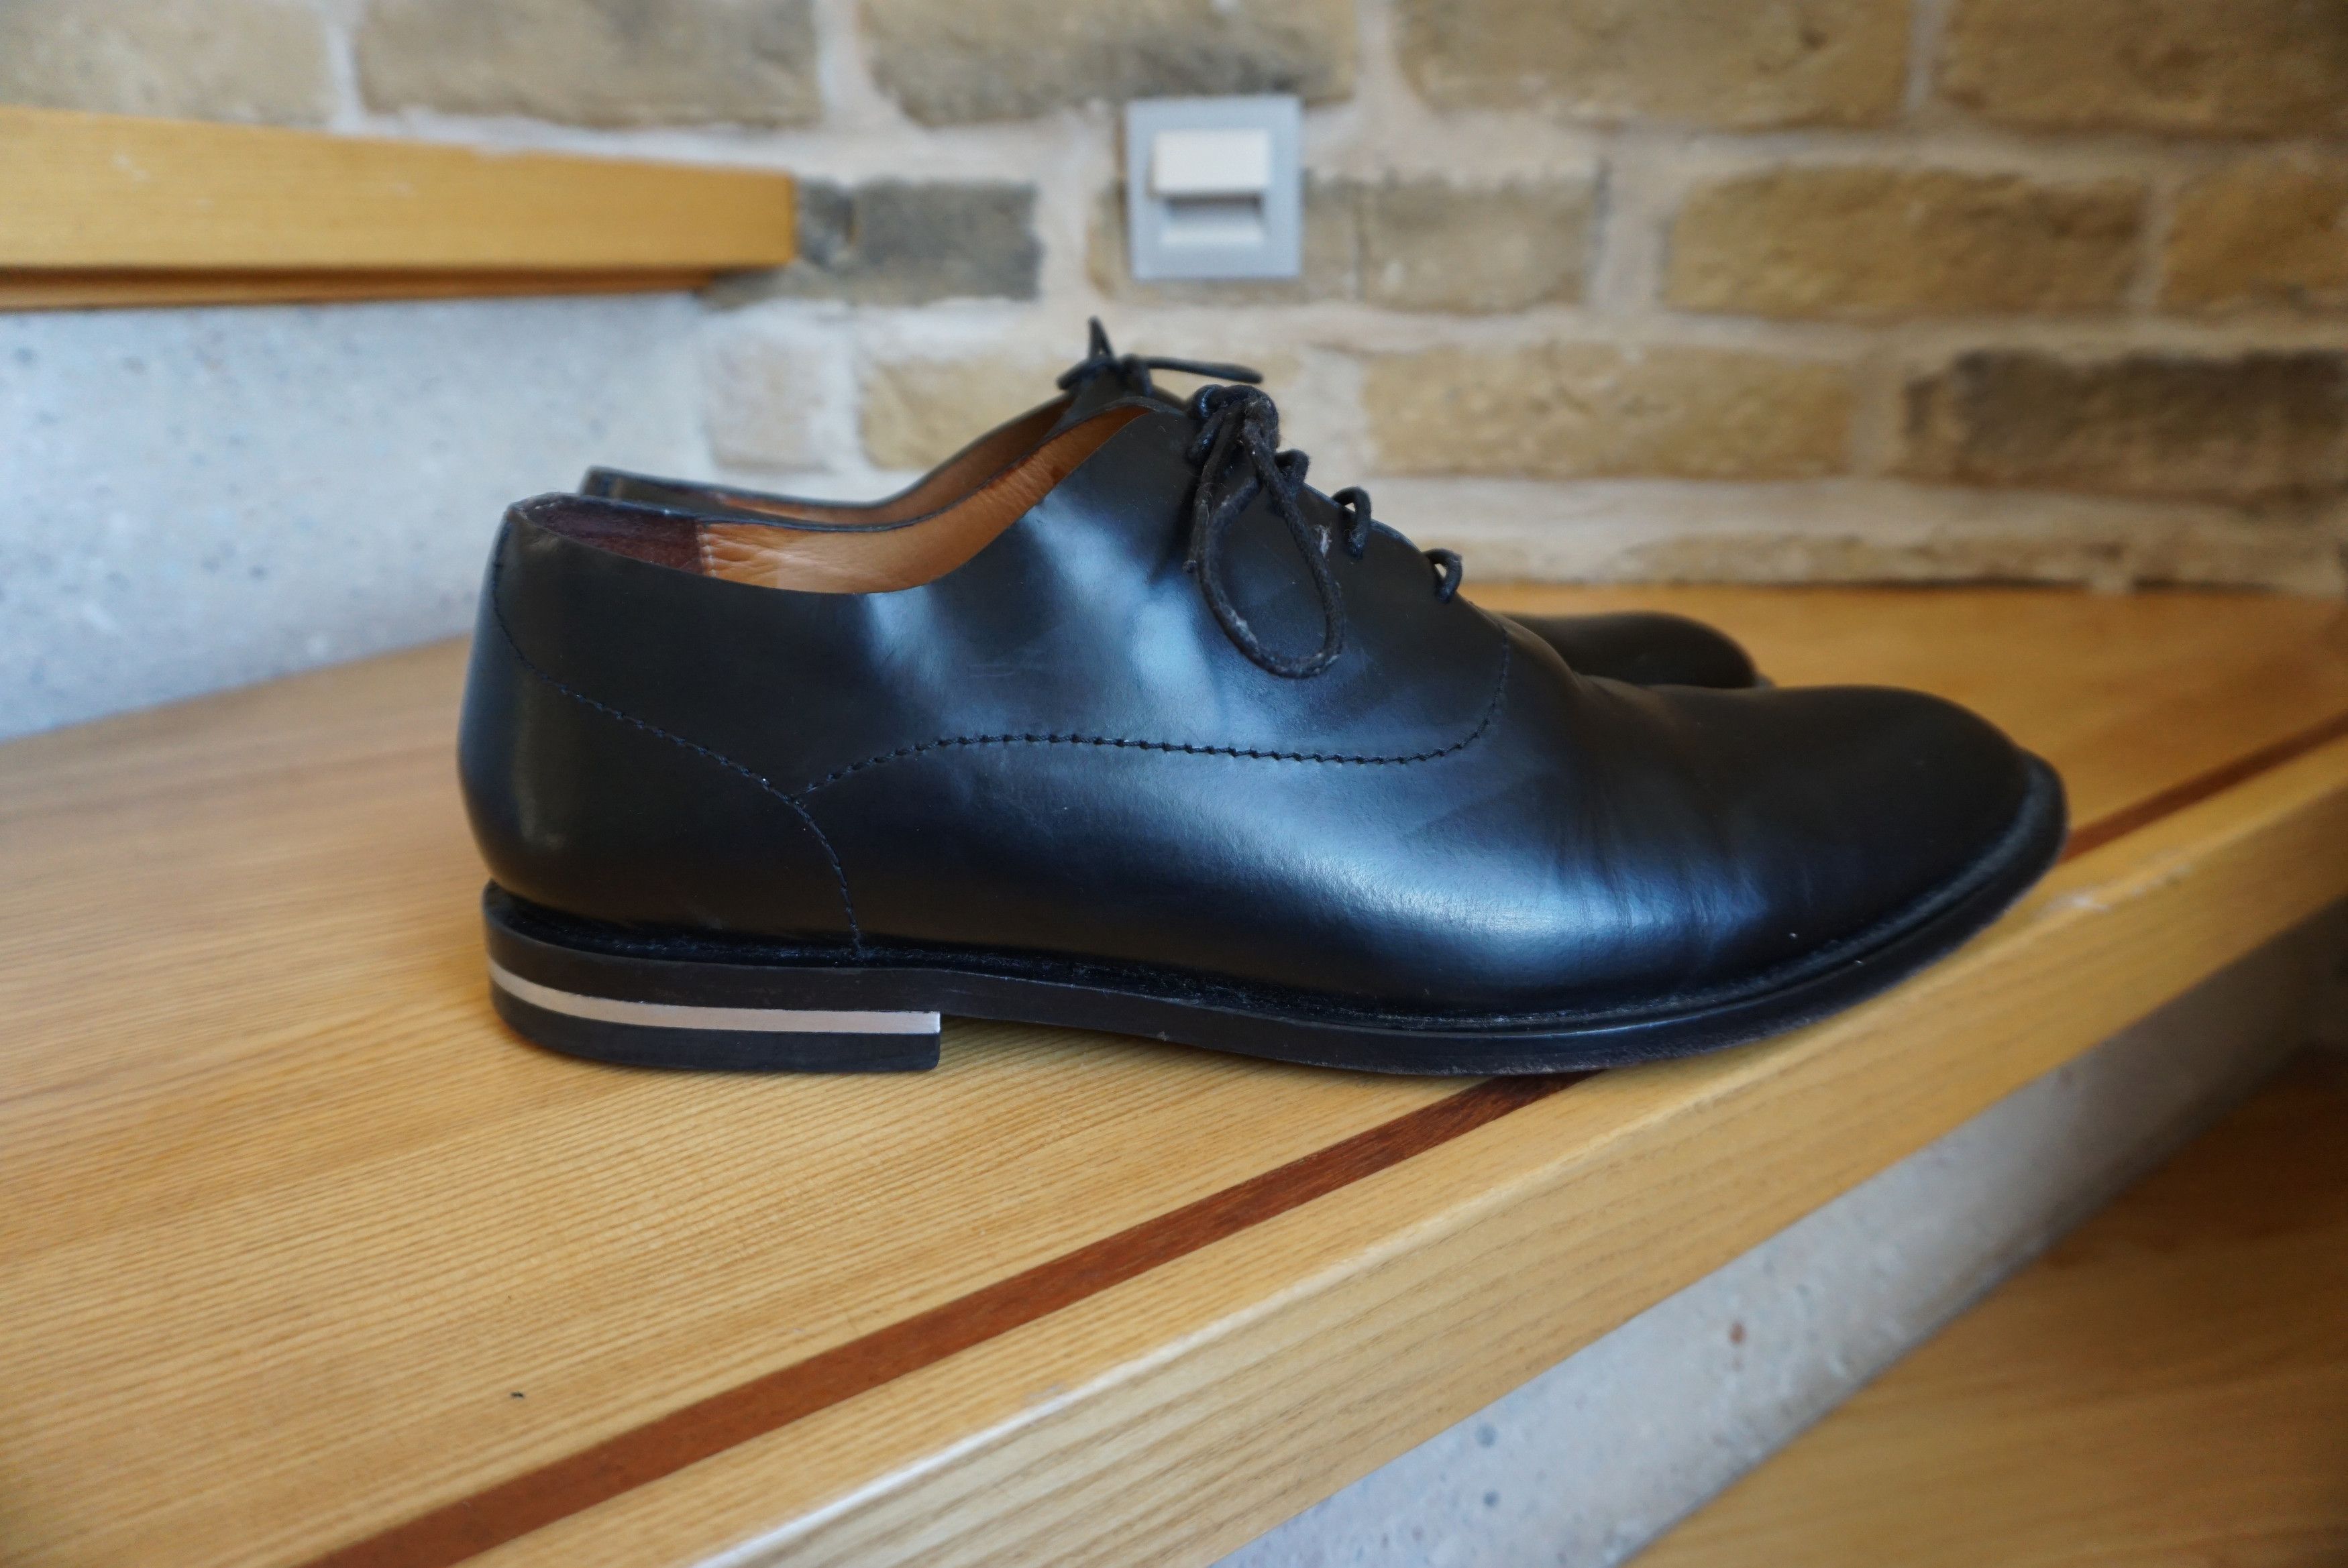 Cos COS RPR$250 leather office shoes EU44 black formal lace up Size US 10.5 / EU 43-44 - 15 Thumbnail